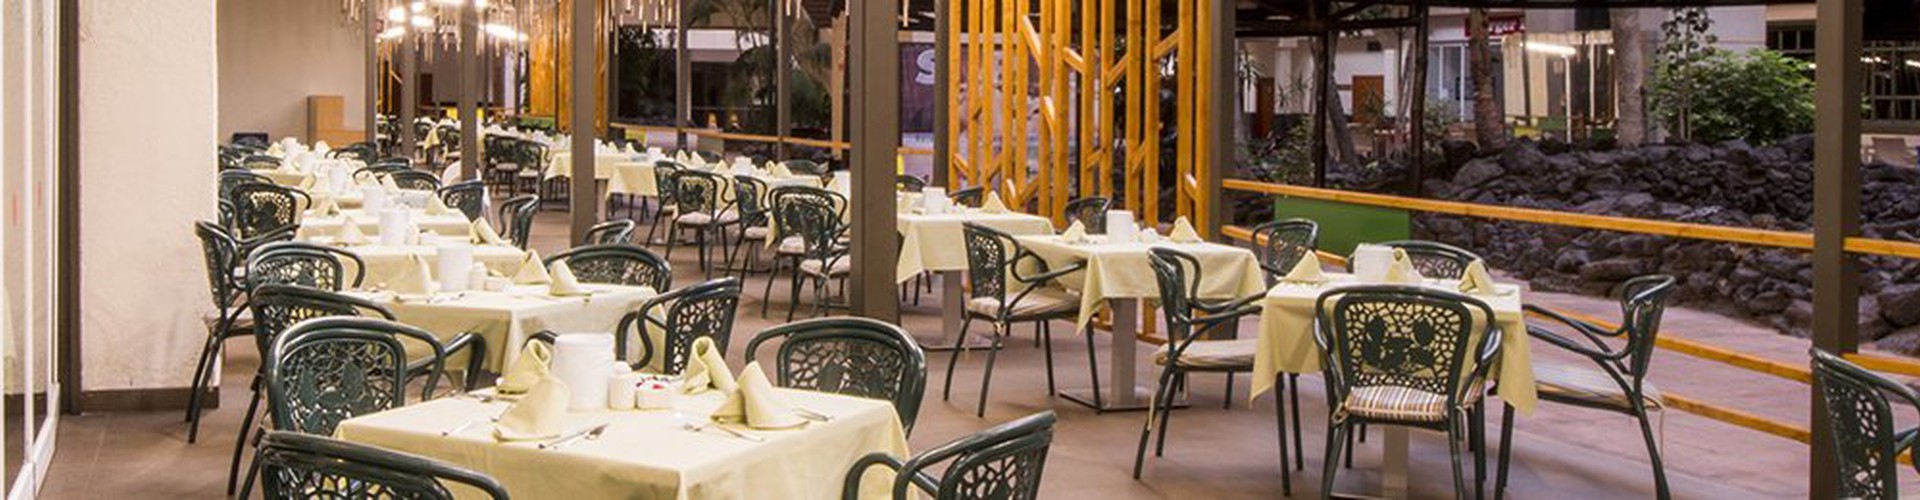 Beatriz Hoteles - Lanzarote - Restaurant